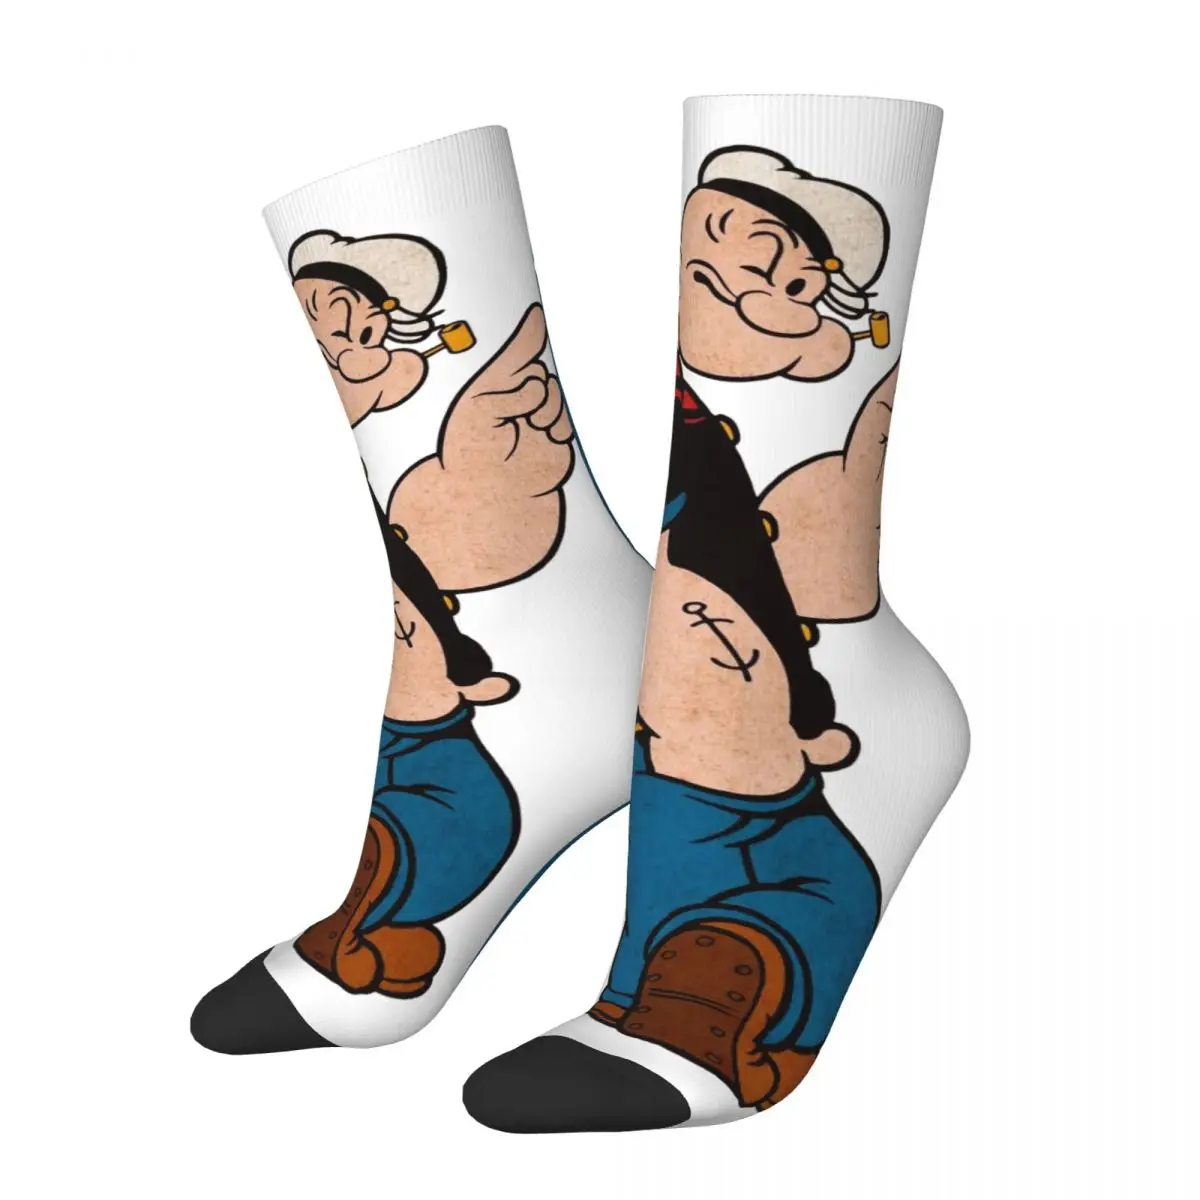 

Happy Funny Cool Men's Socks Retro Harajuku P-Popeye The Sailor Cartoon Hip Hop Novelty Casual Crew Crazy Sock Gift Printed